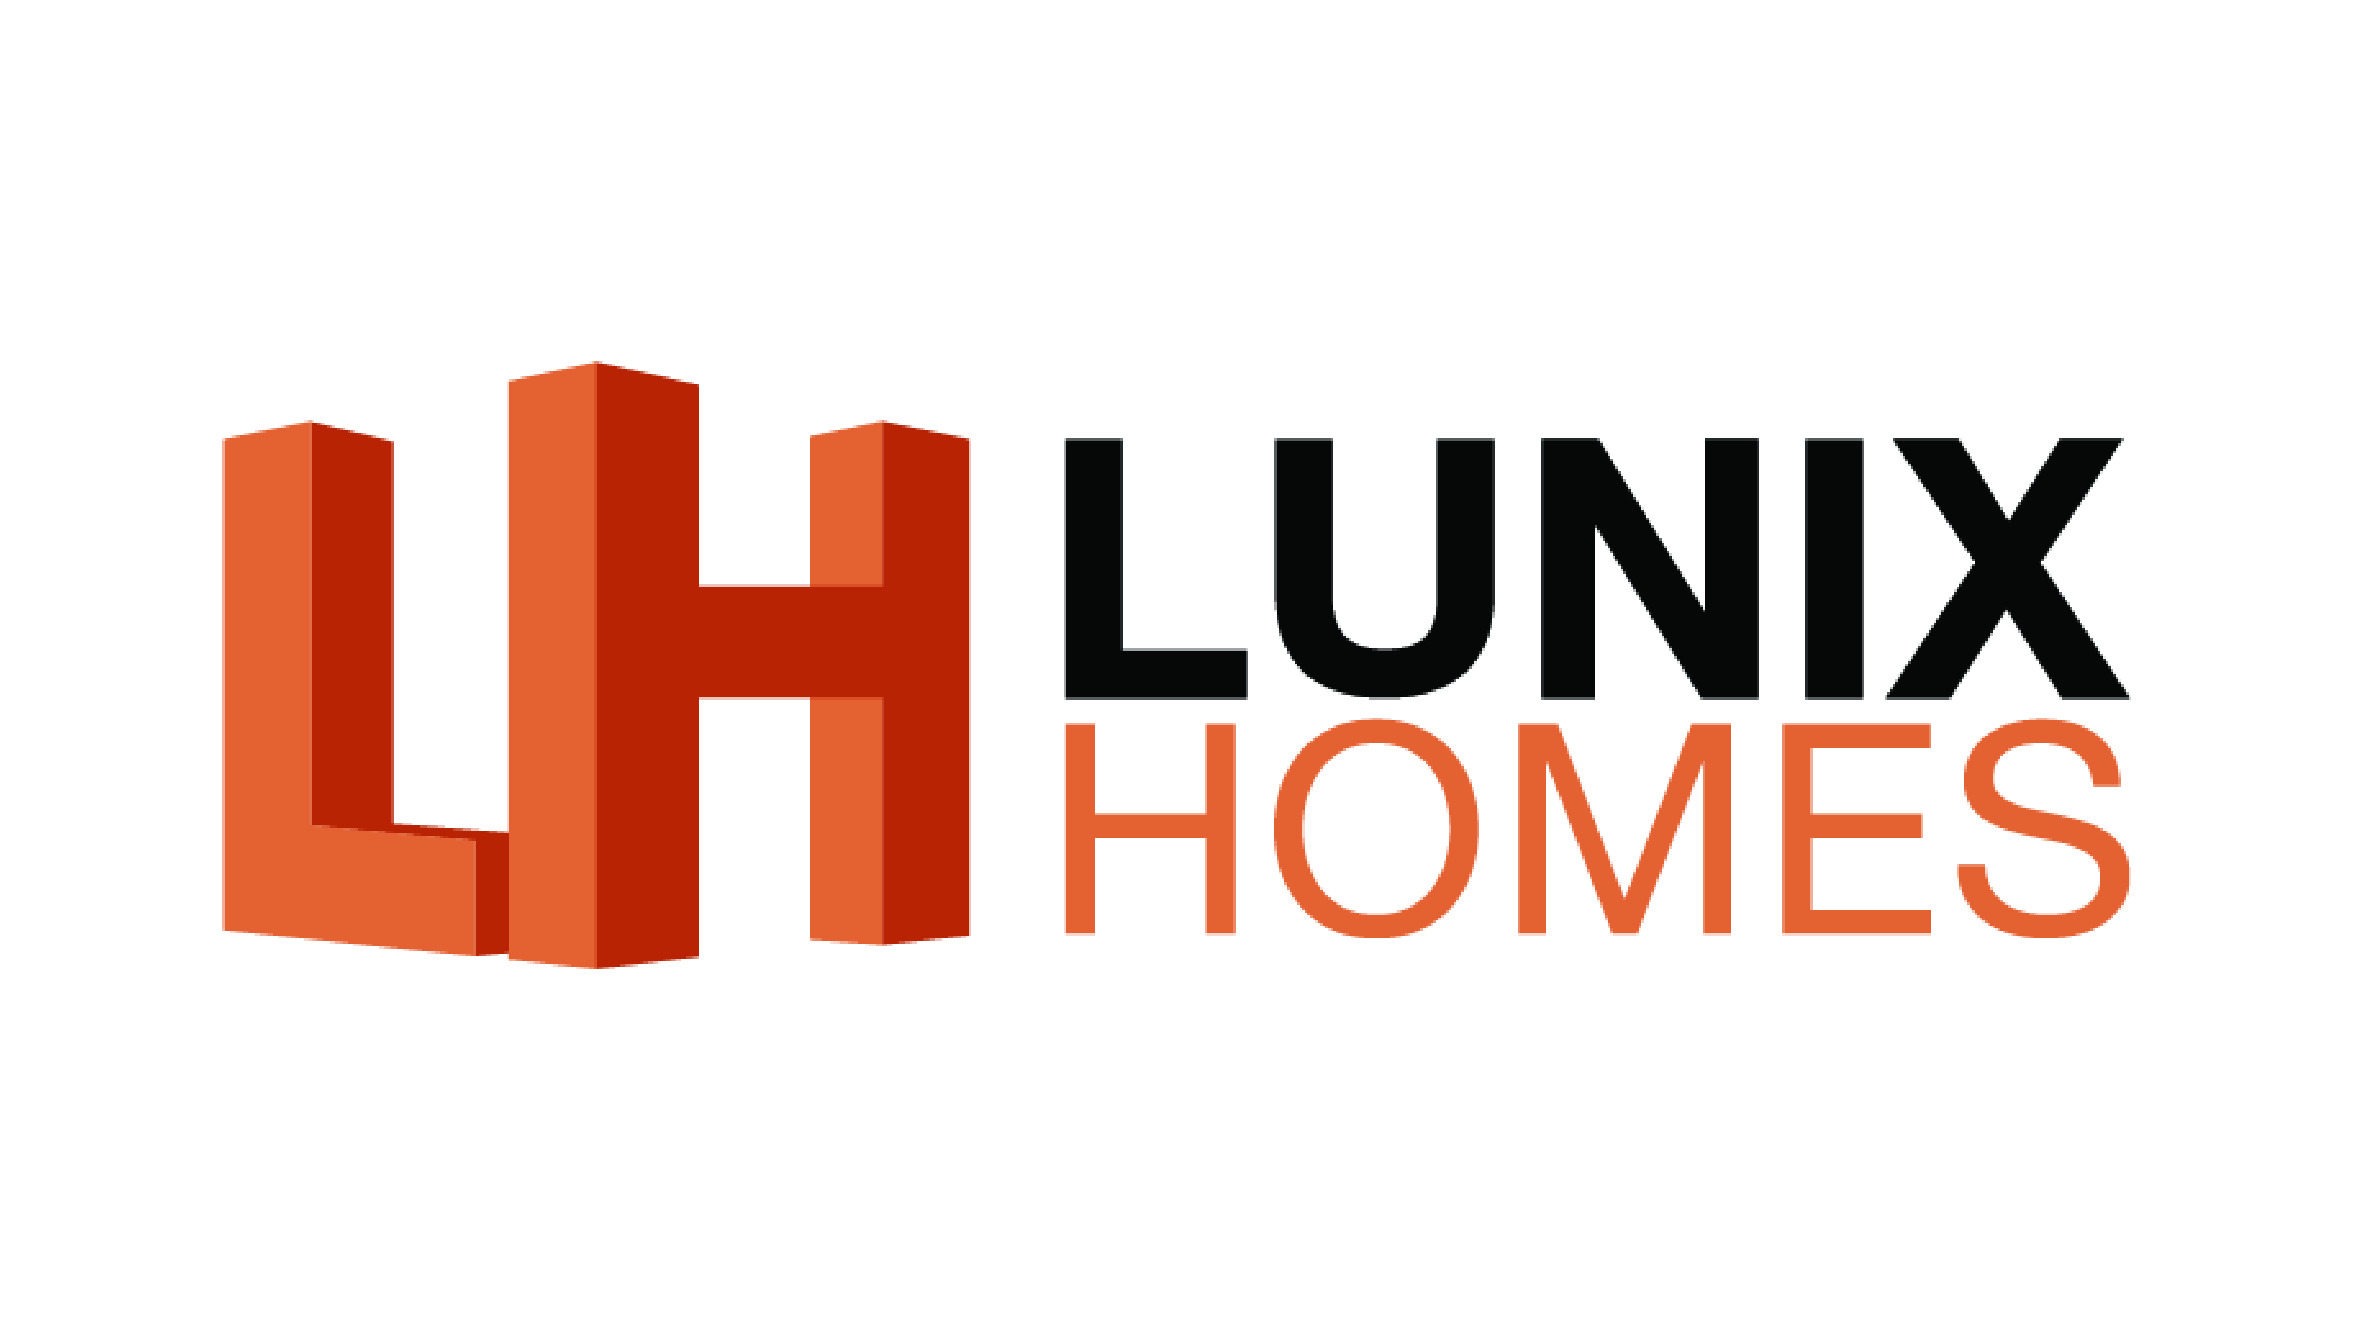 Lunix Homes Limited